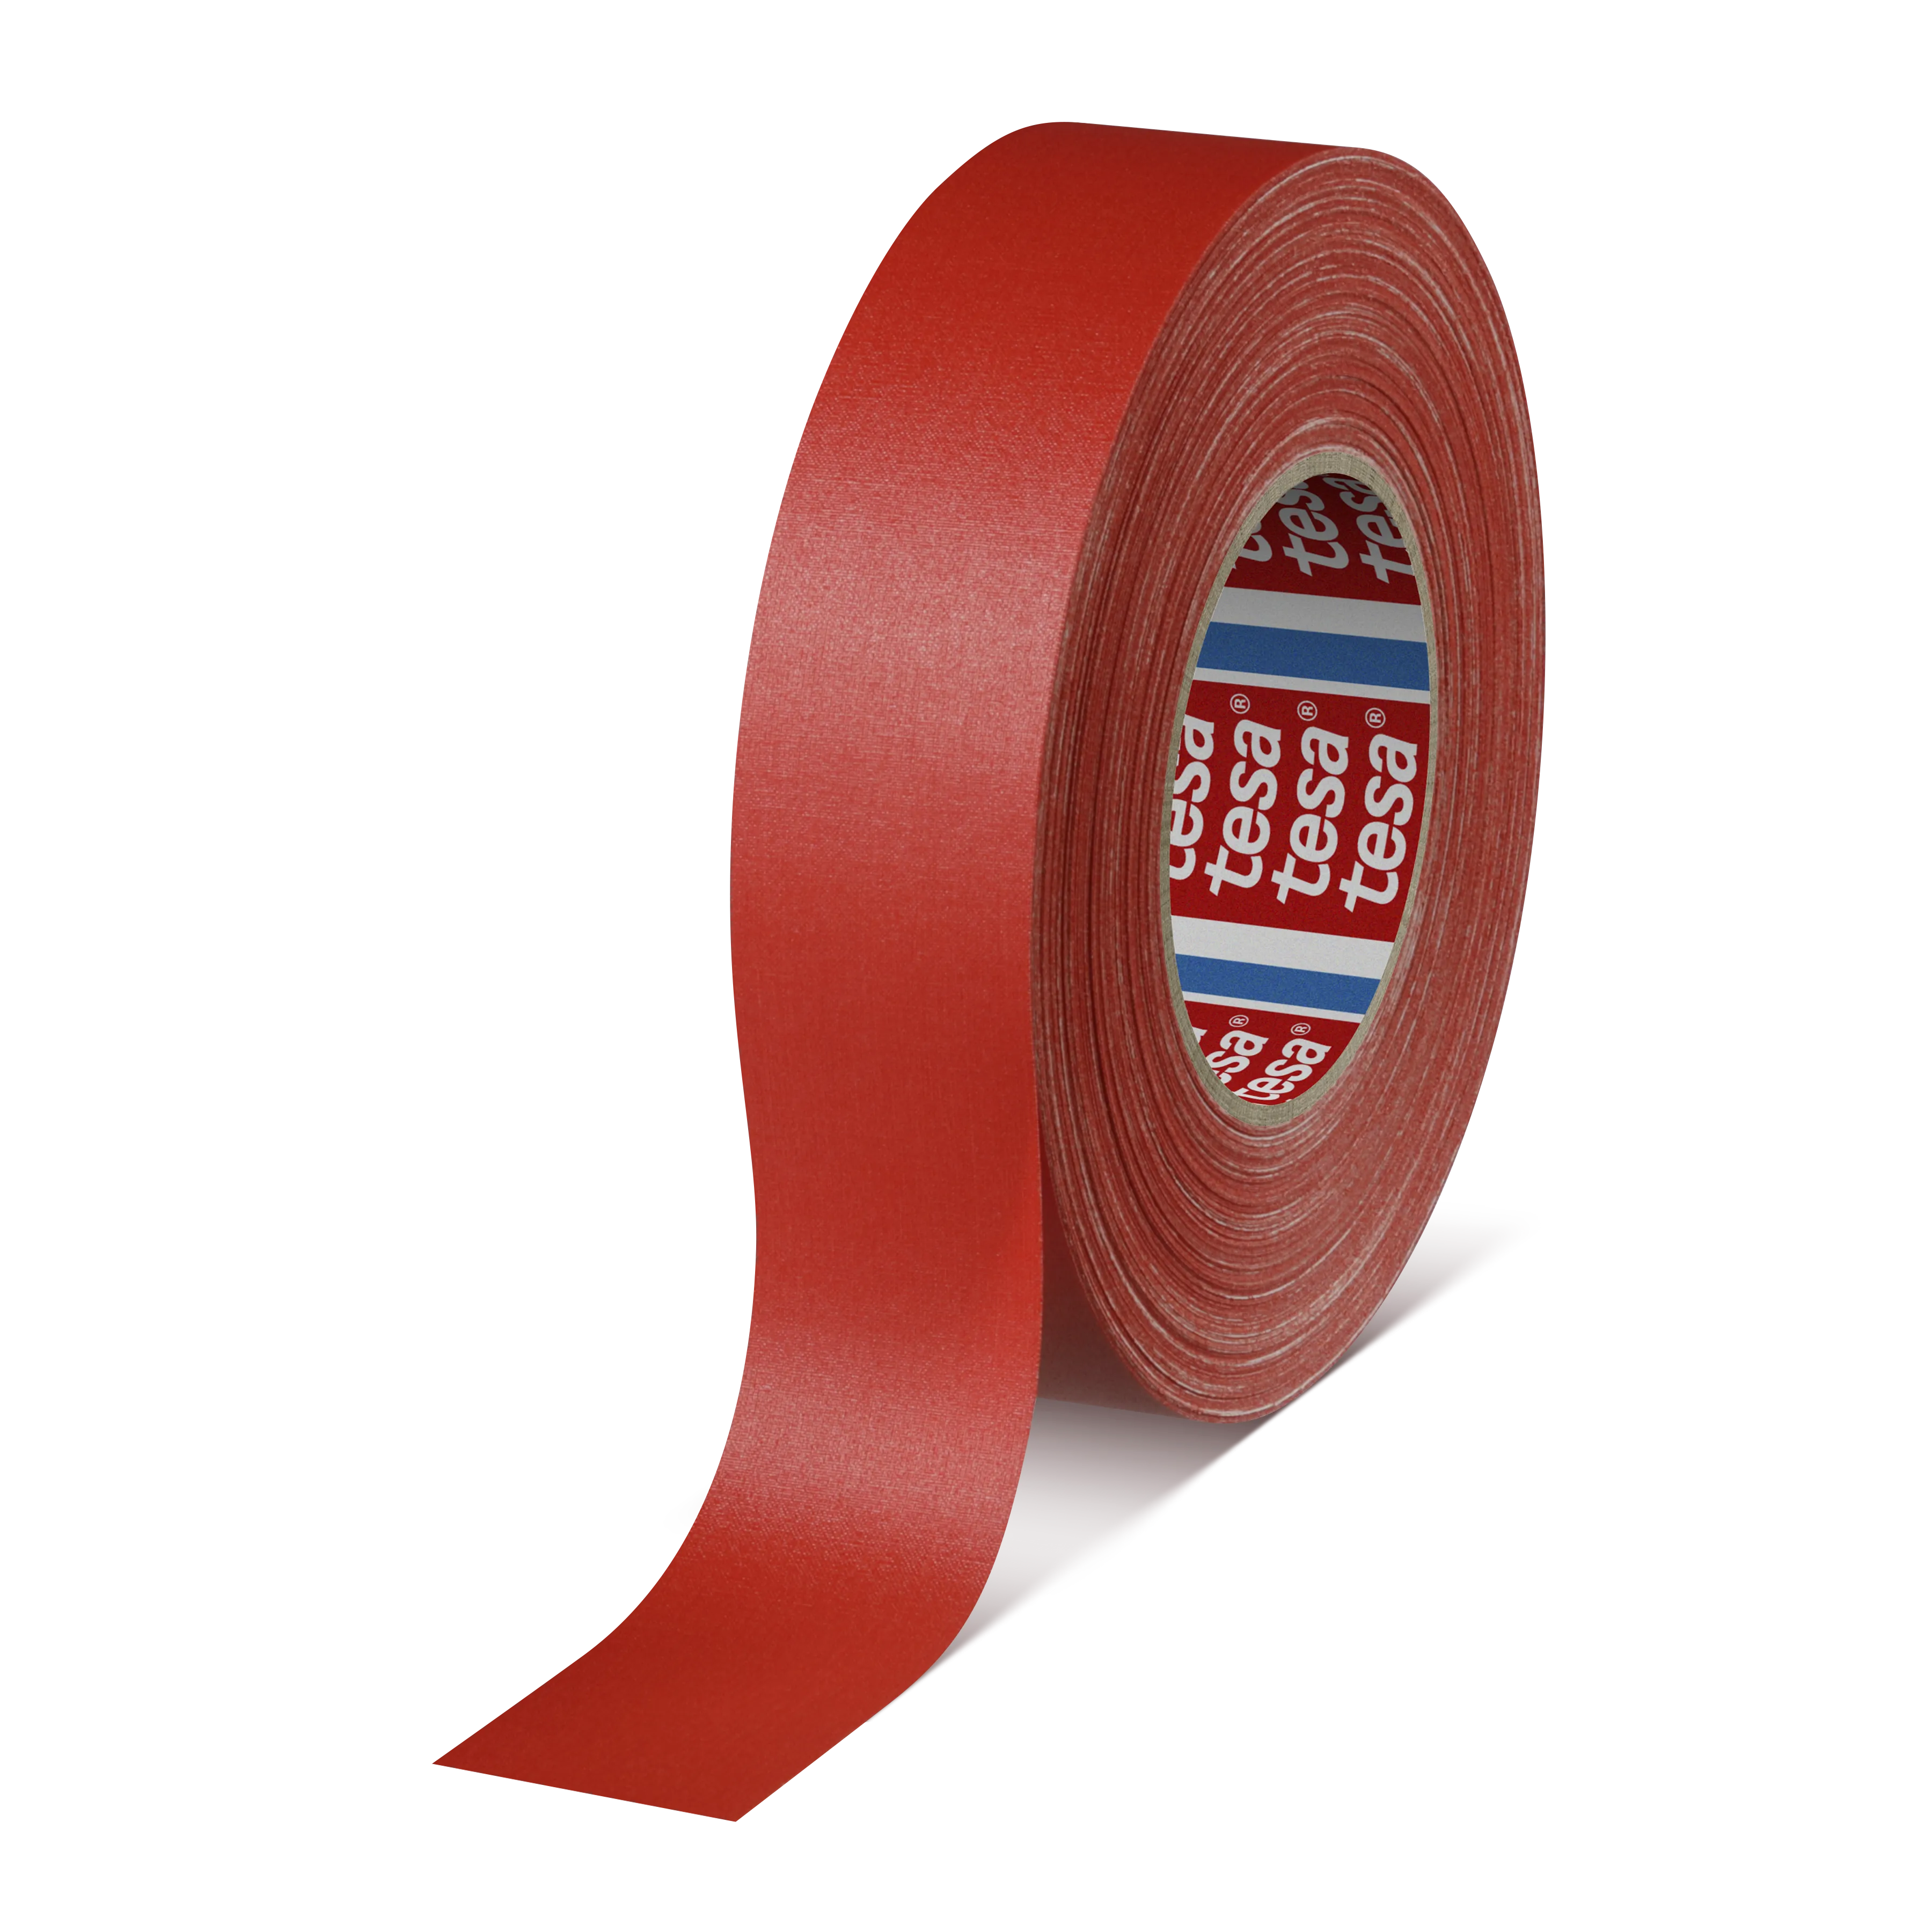 Feodaal schrobben Misbruik tesa 4661 sterk rood standaard Duct Tape 38mm